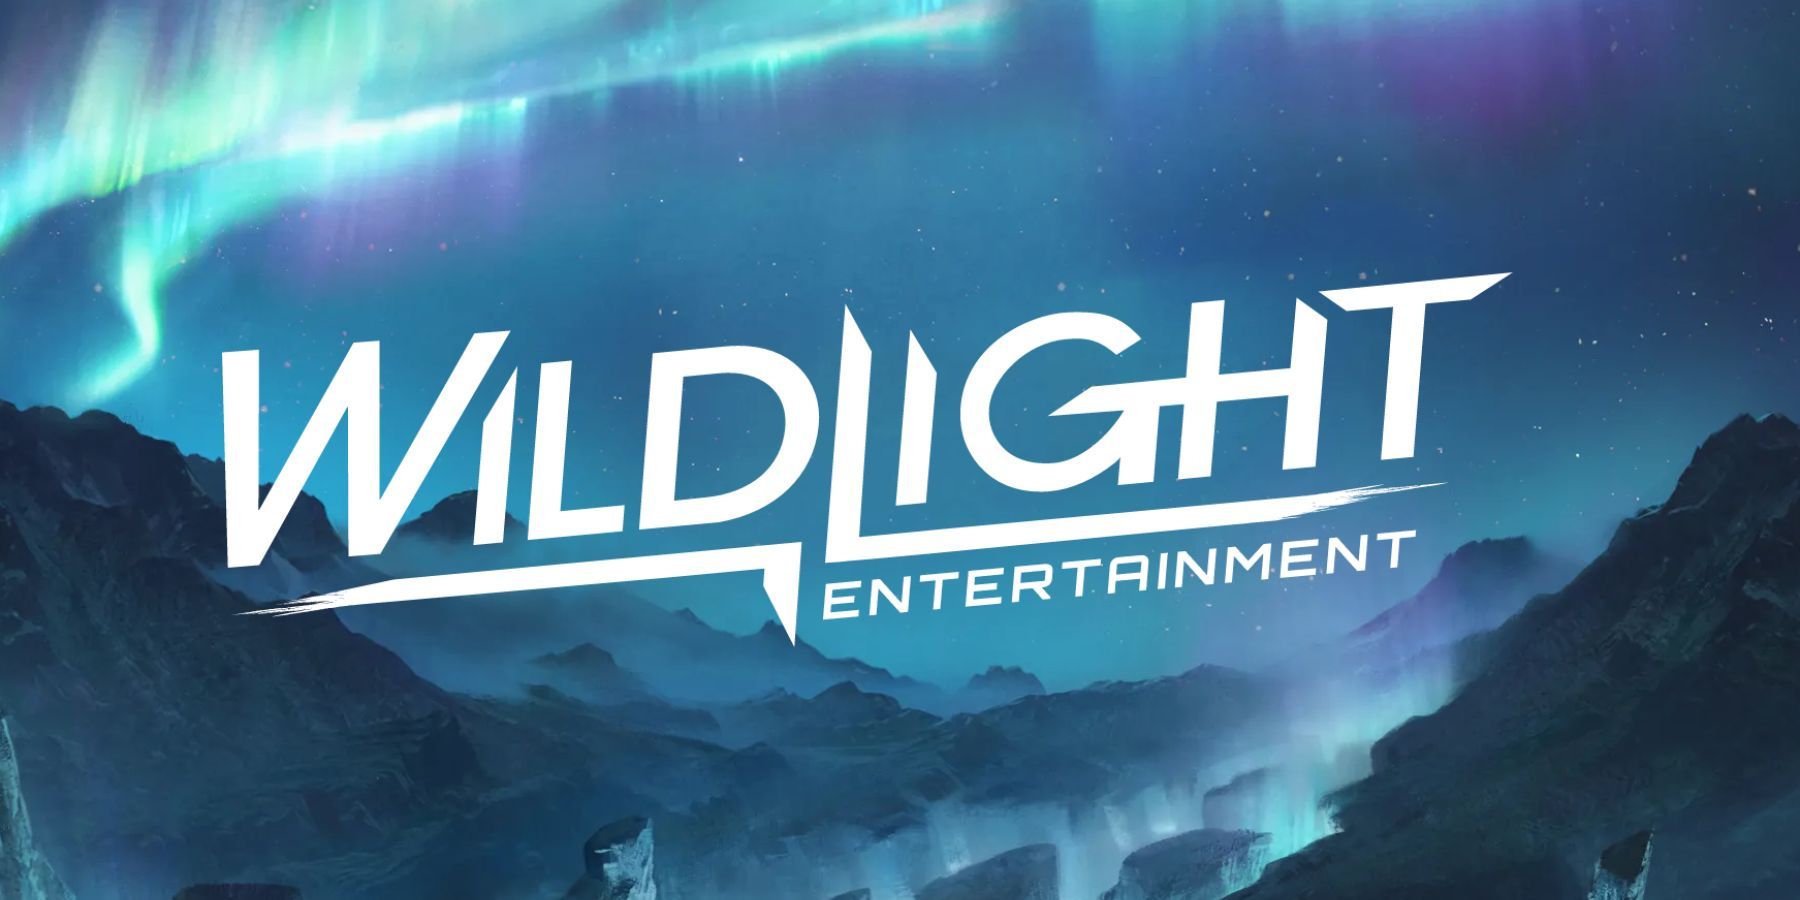 Wildlight Entertainment-1